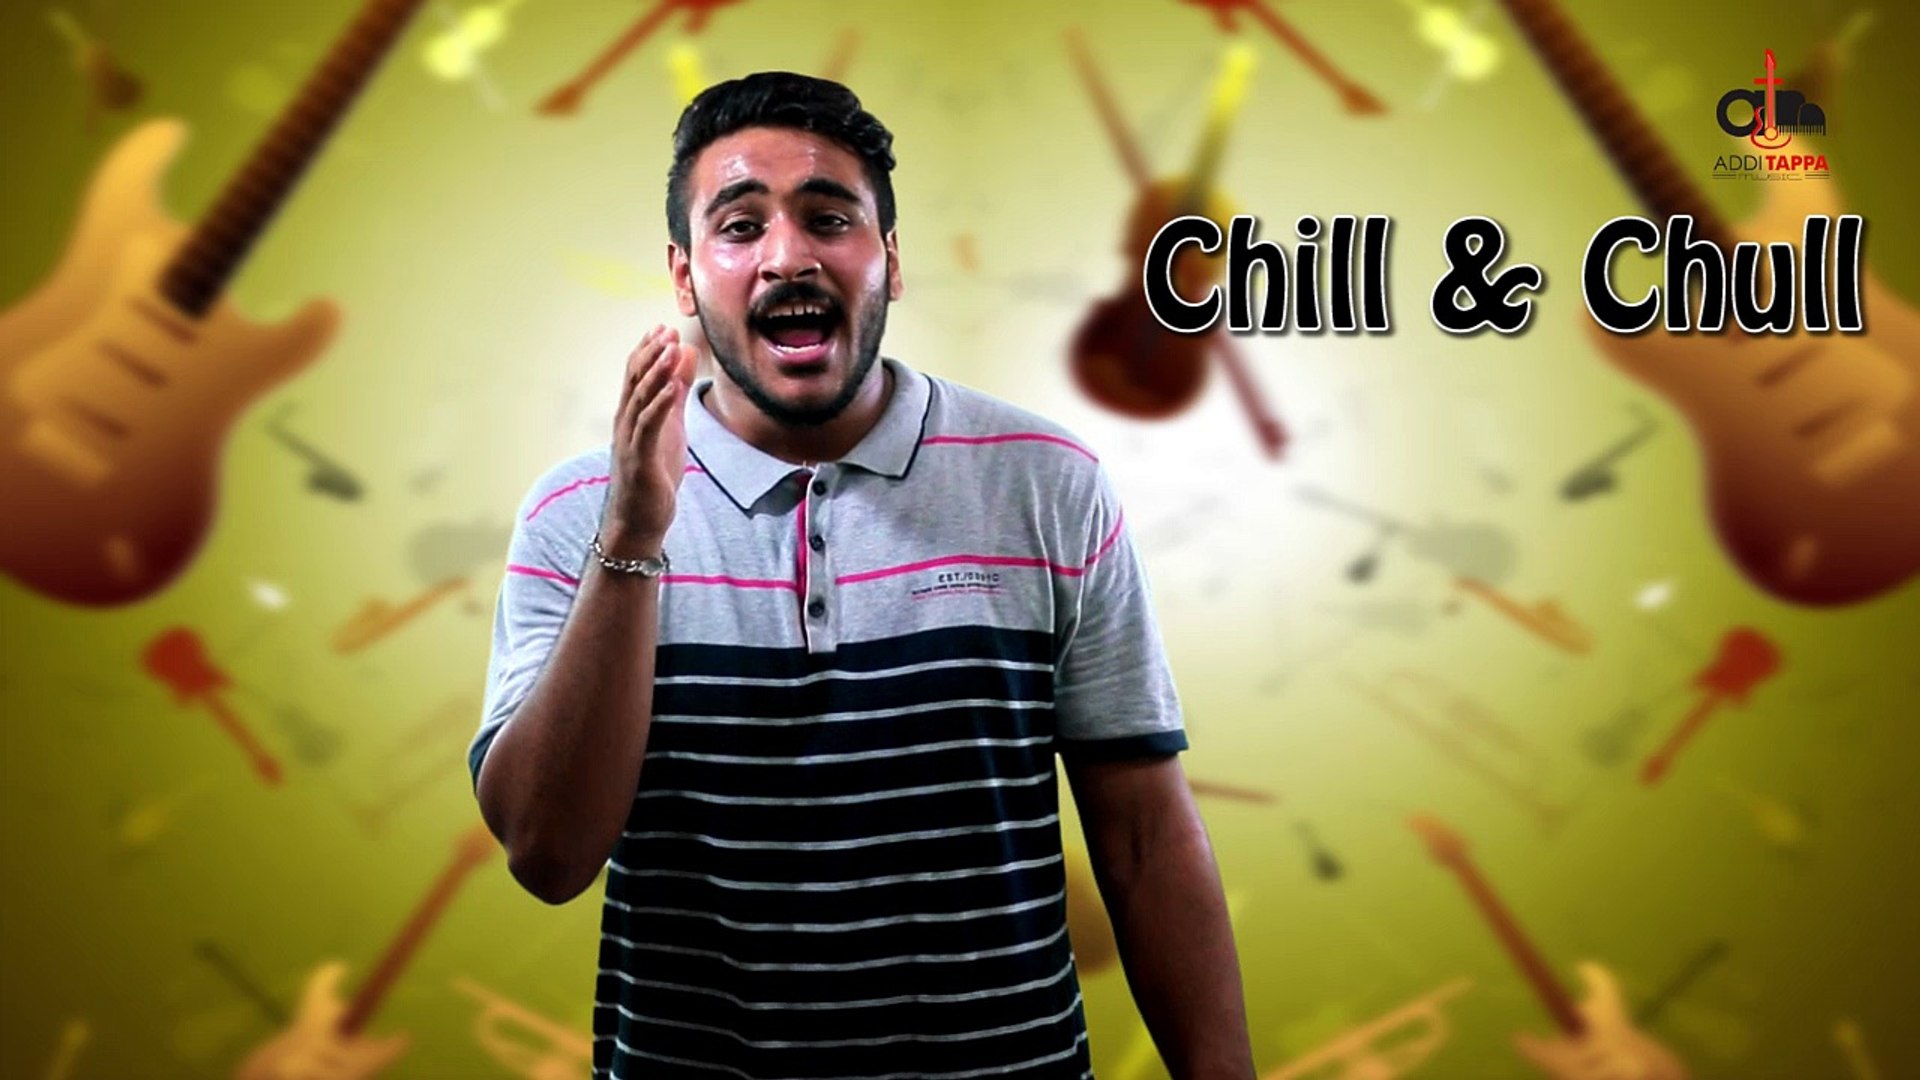 Sukh-E Singer Roast - Chill & Chull - Addi Tappa Music - Funny Punjabi Videos 2016